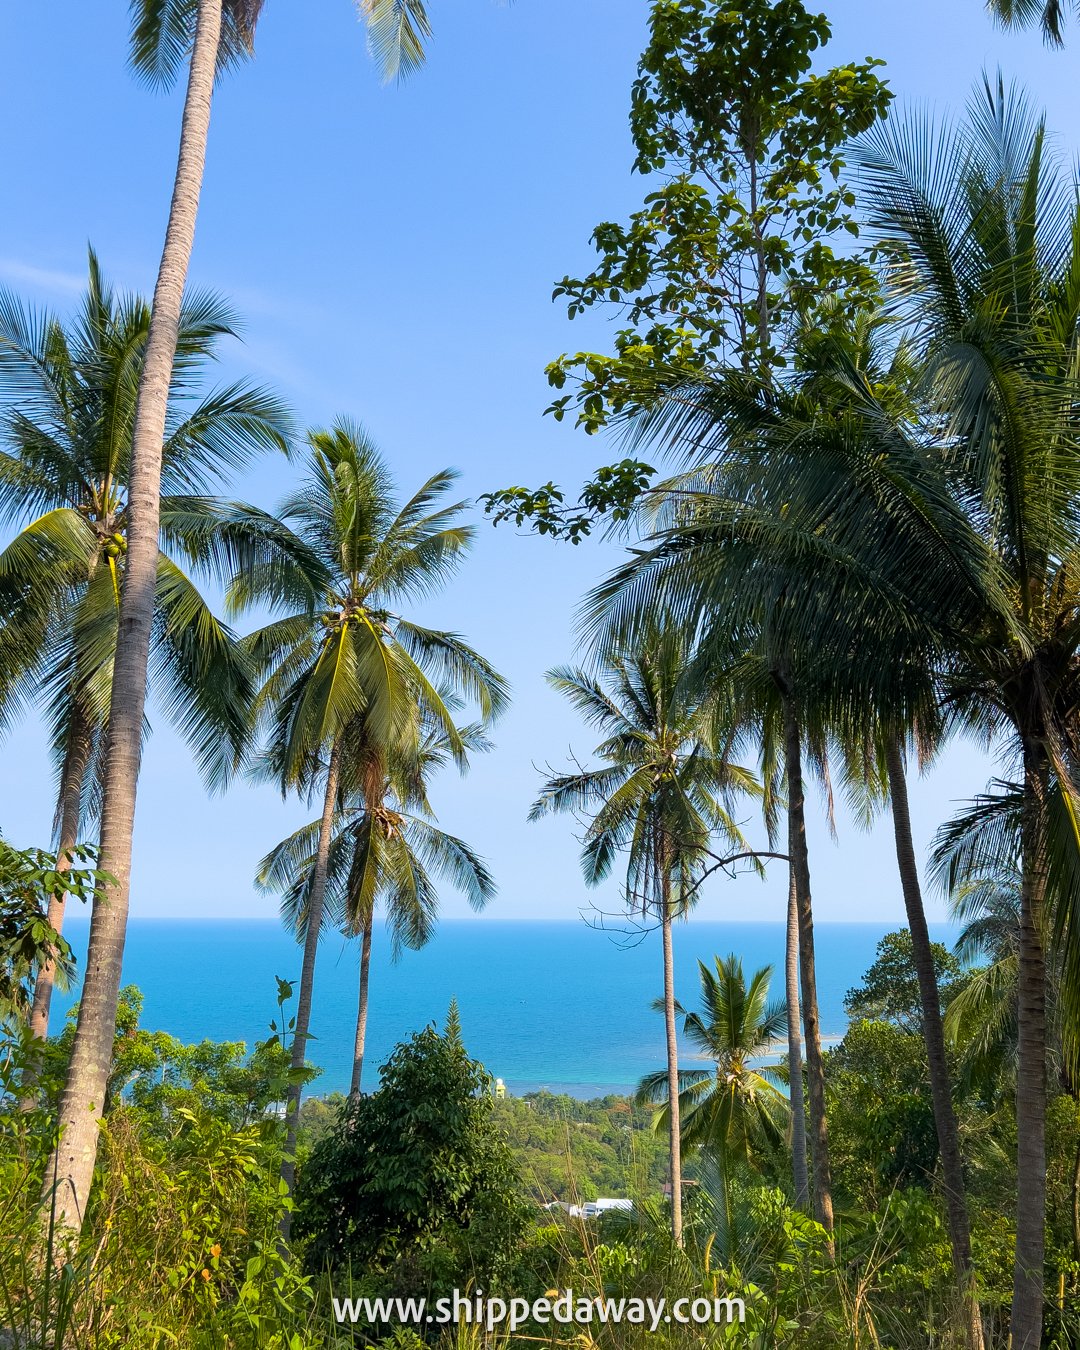 Palm trees, nature, jungle - Koh Samui, Thailand